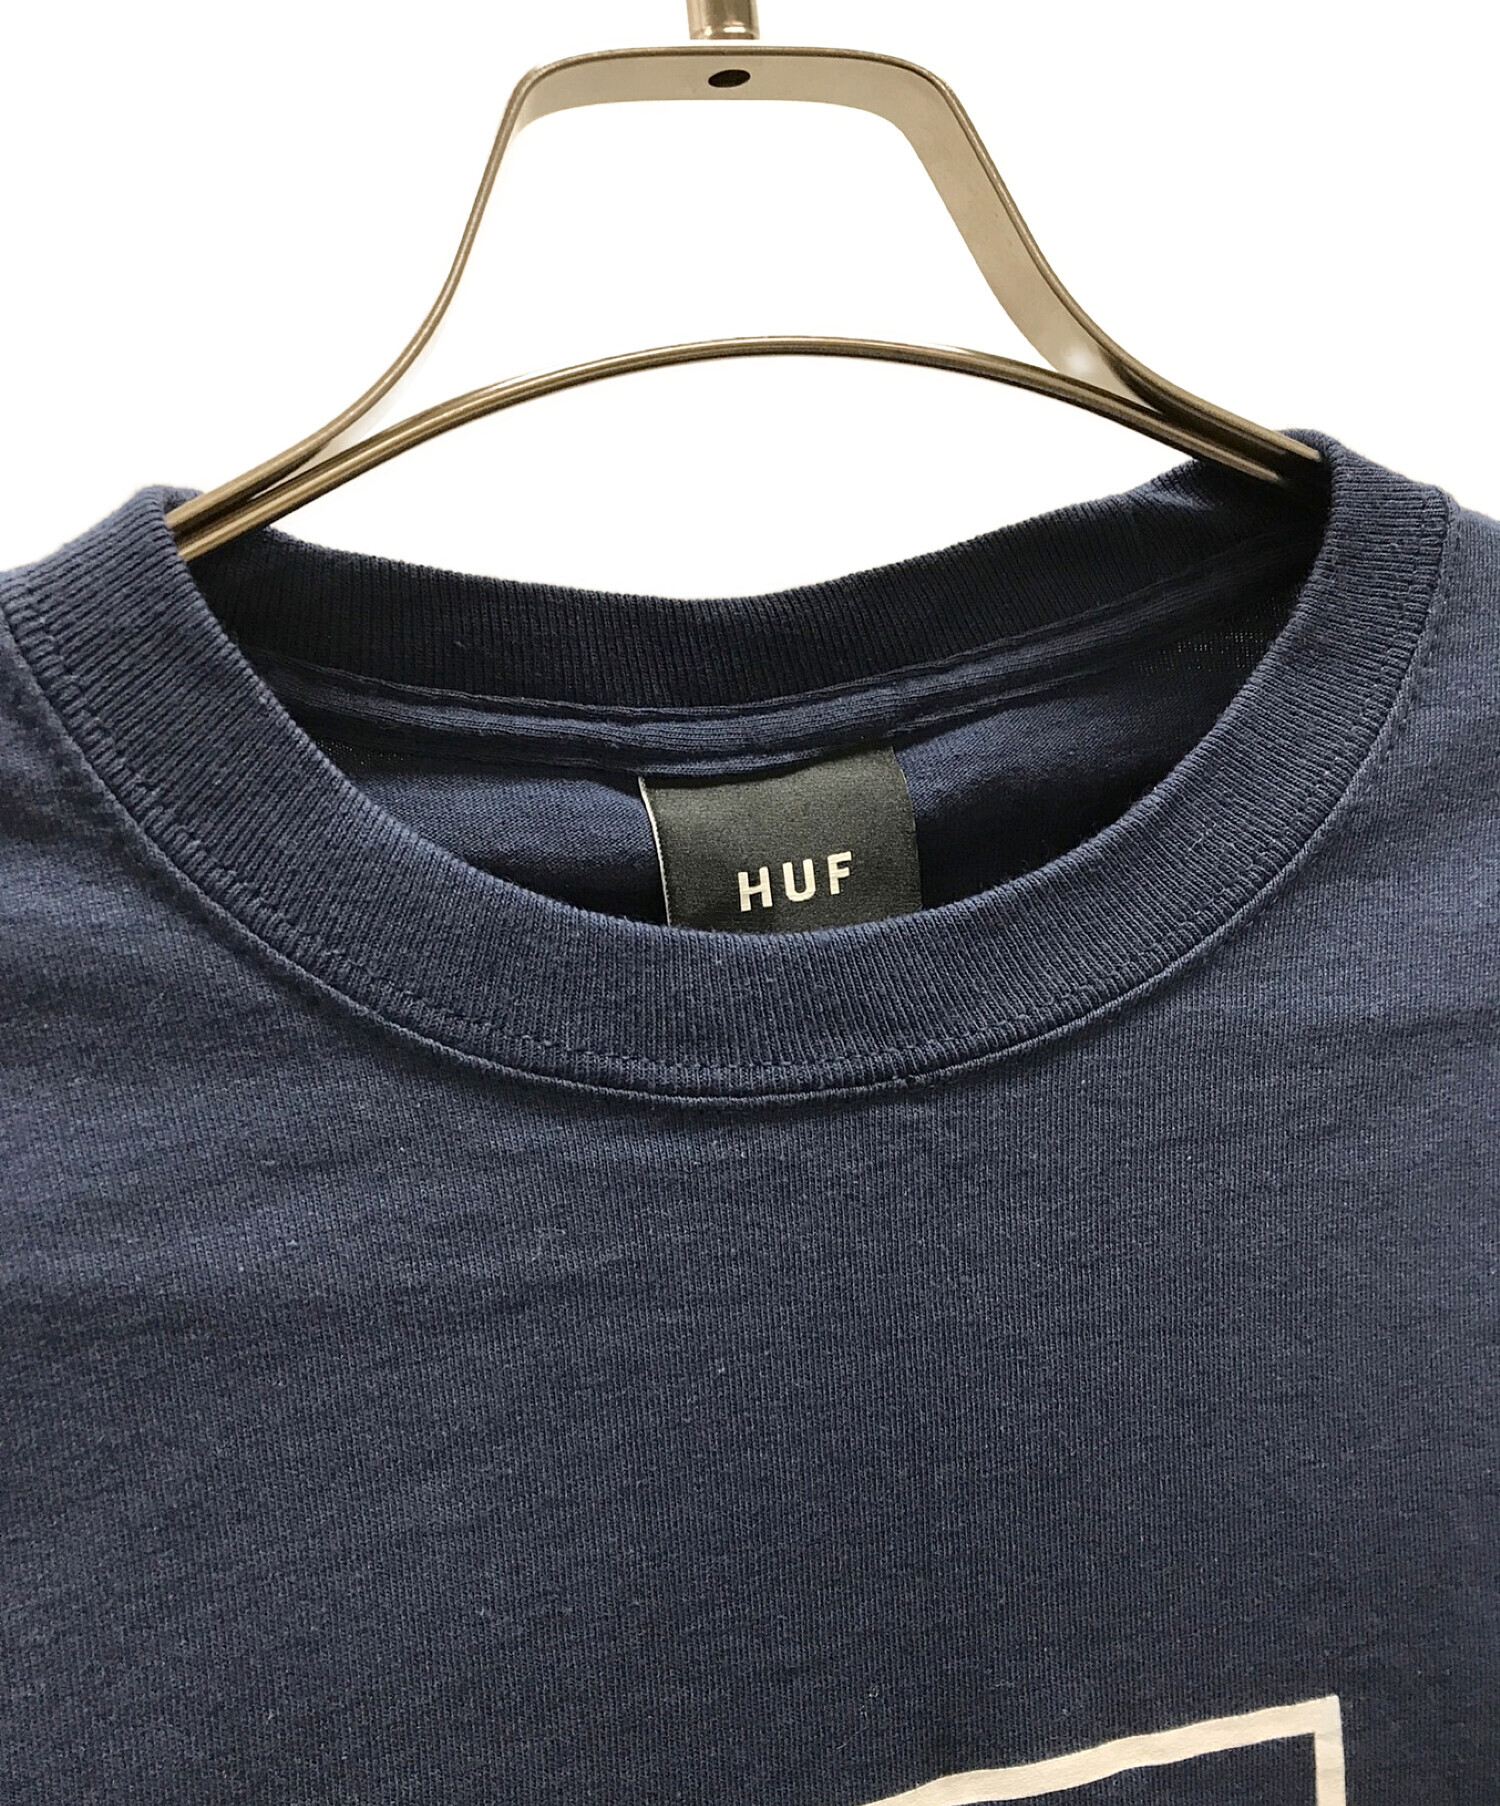 HUF (ハフ) 長袖Tシャツ ネイビー サイズ:S